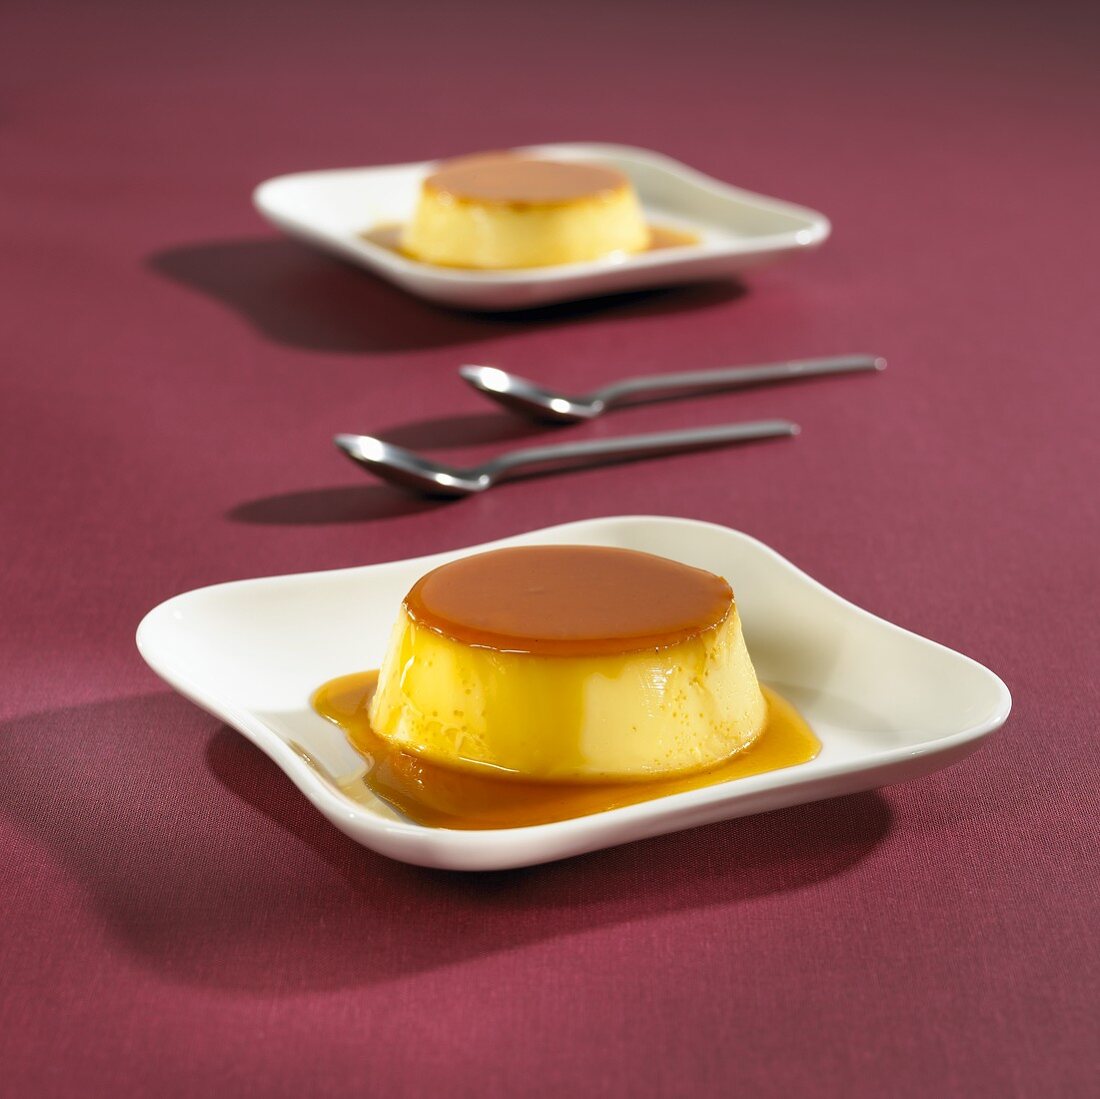 Crème caramel on two plates